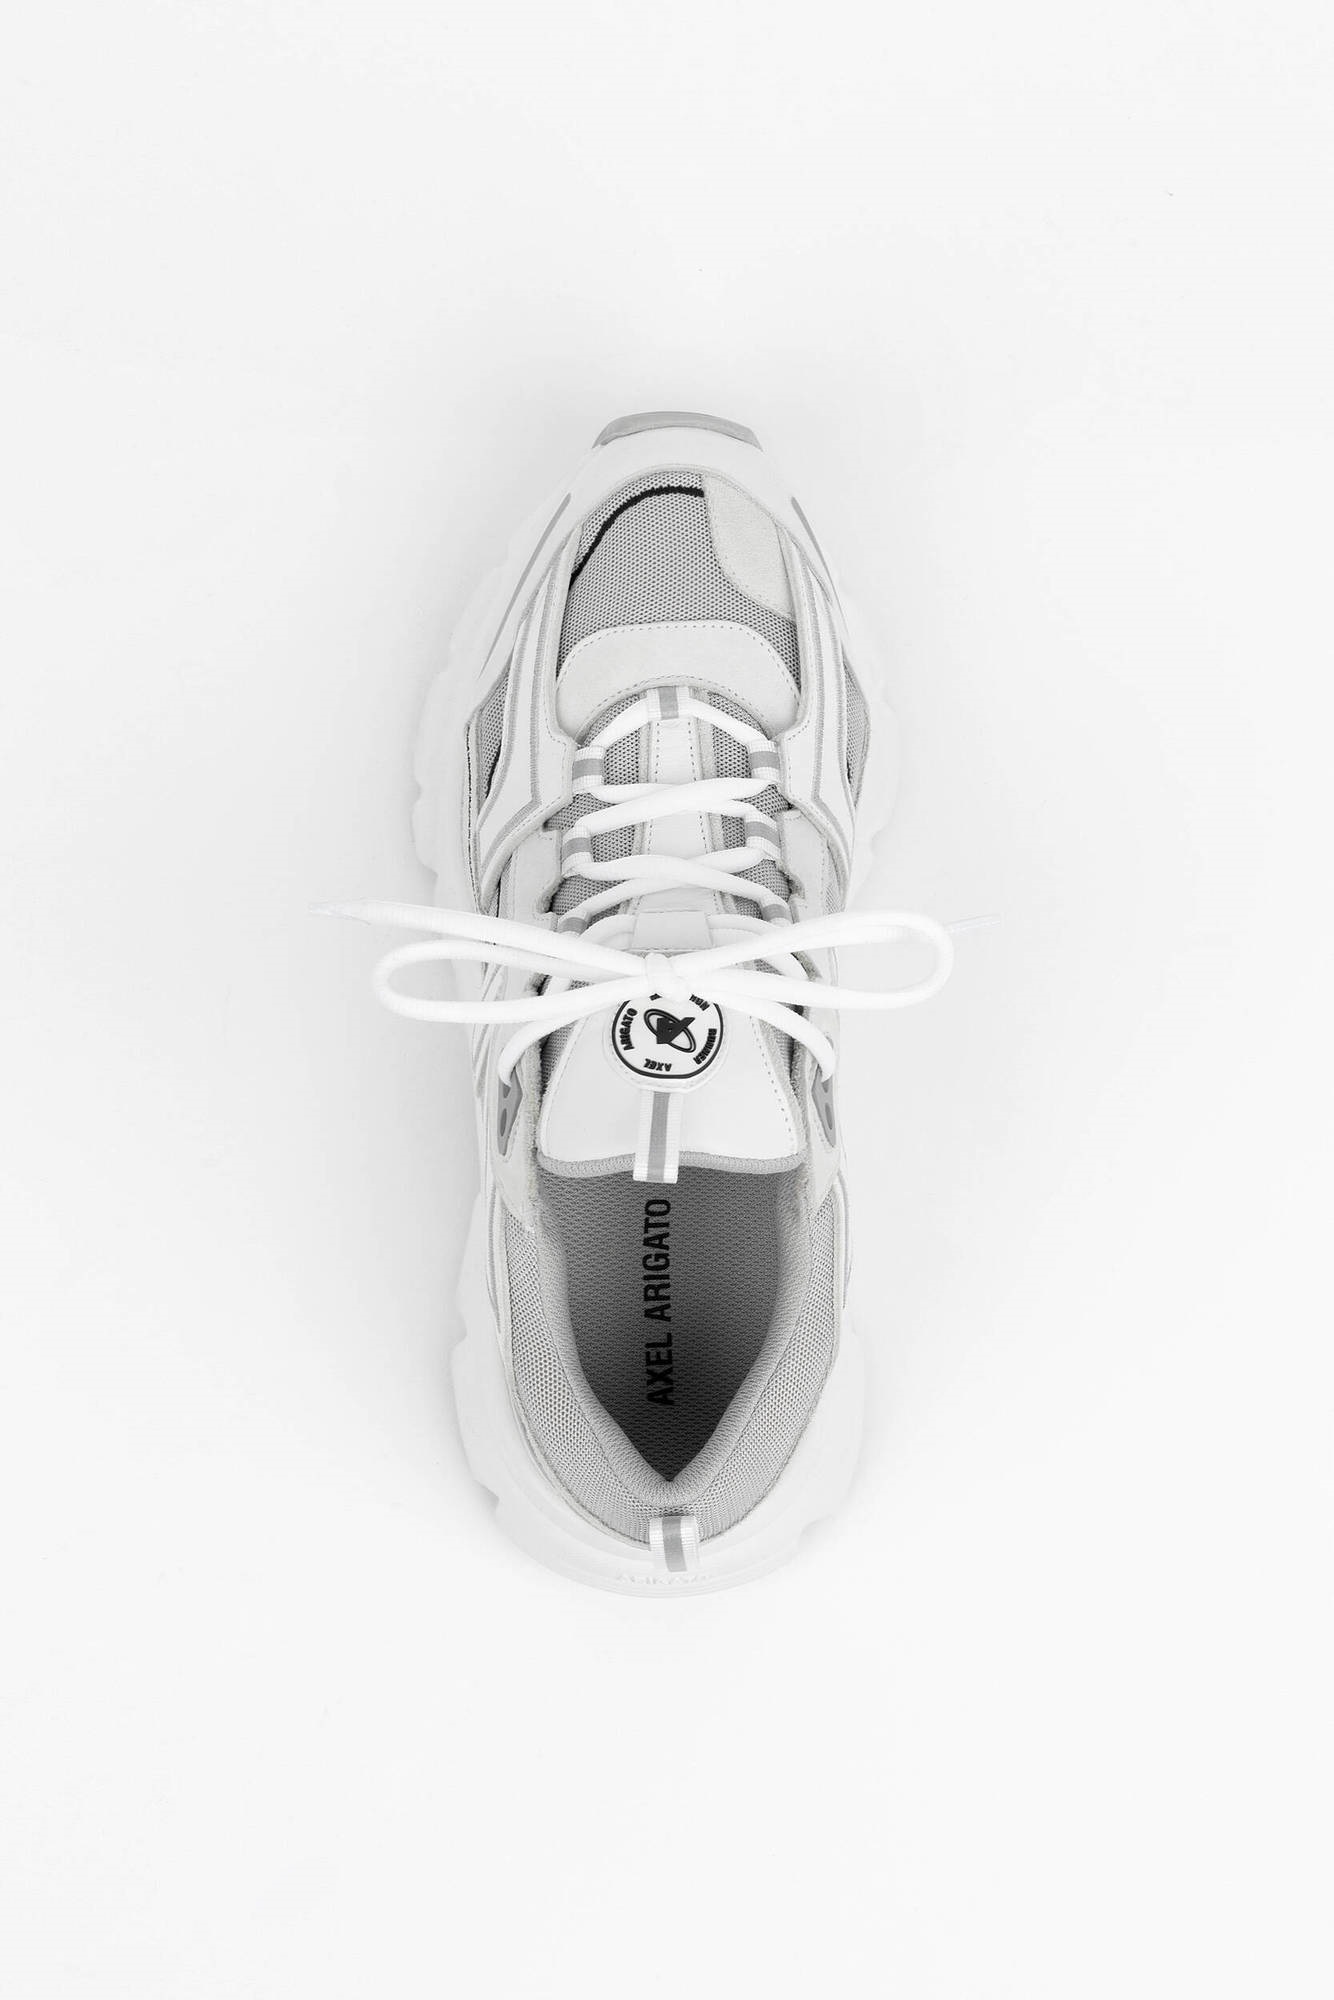 AXEL ARIGATO Marathon R-Trail Sneaker in White 43